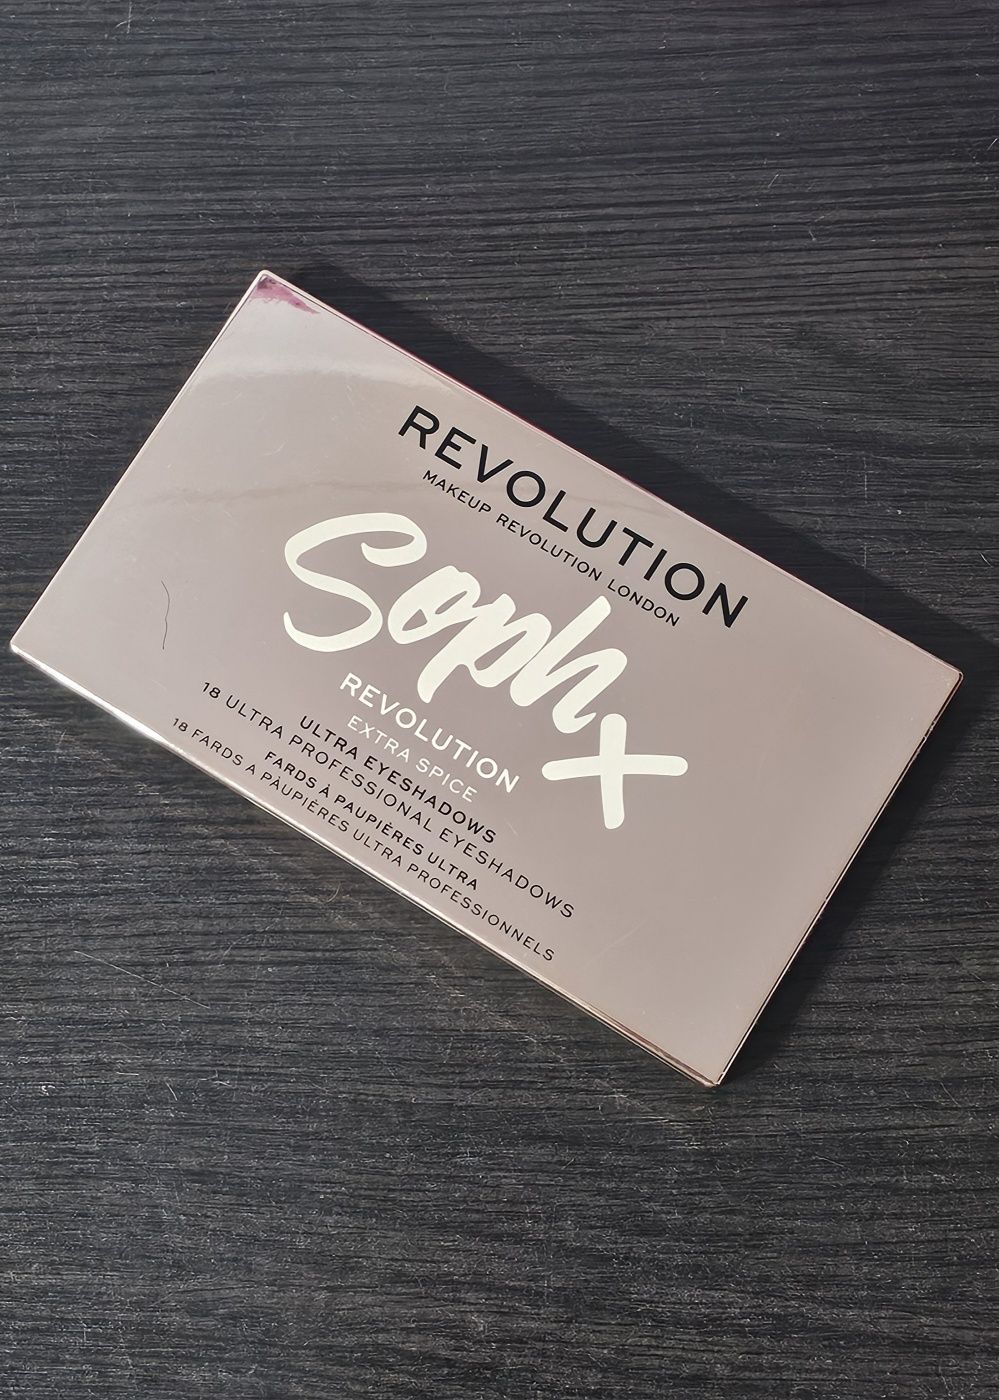 Revolution - Sophx, Extra Spice. Ultra Eyeshadow. Paletka cieni, cieni